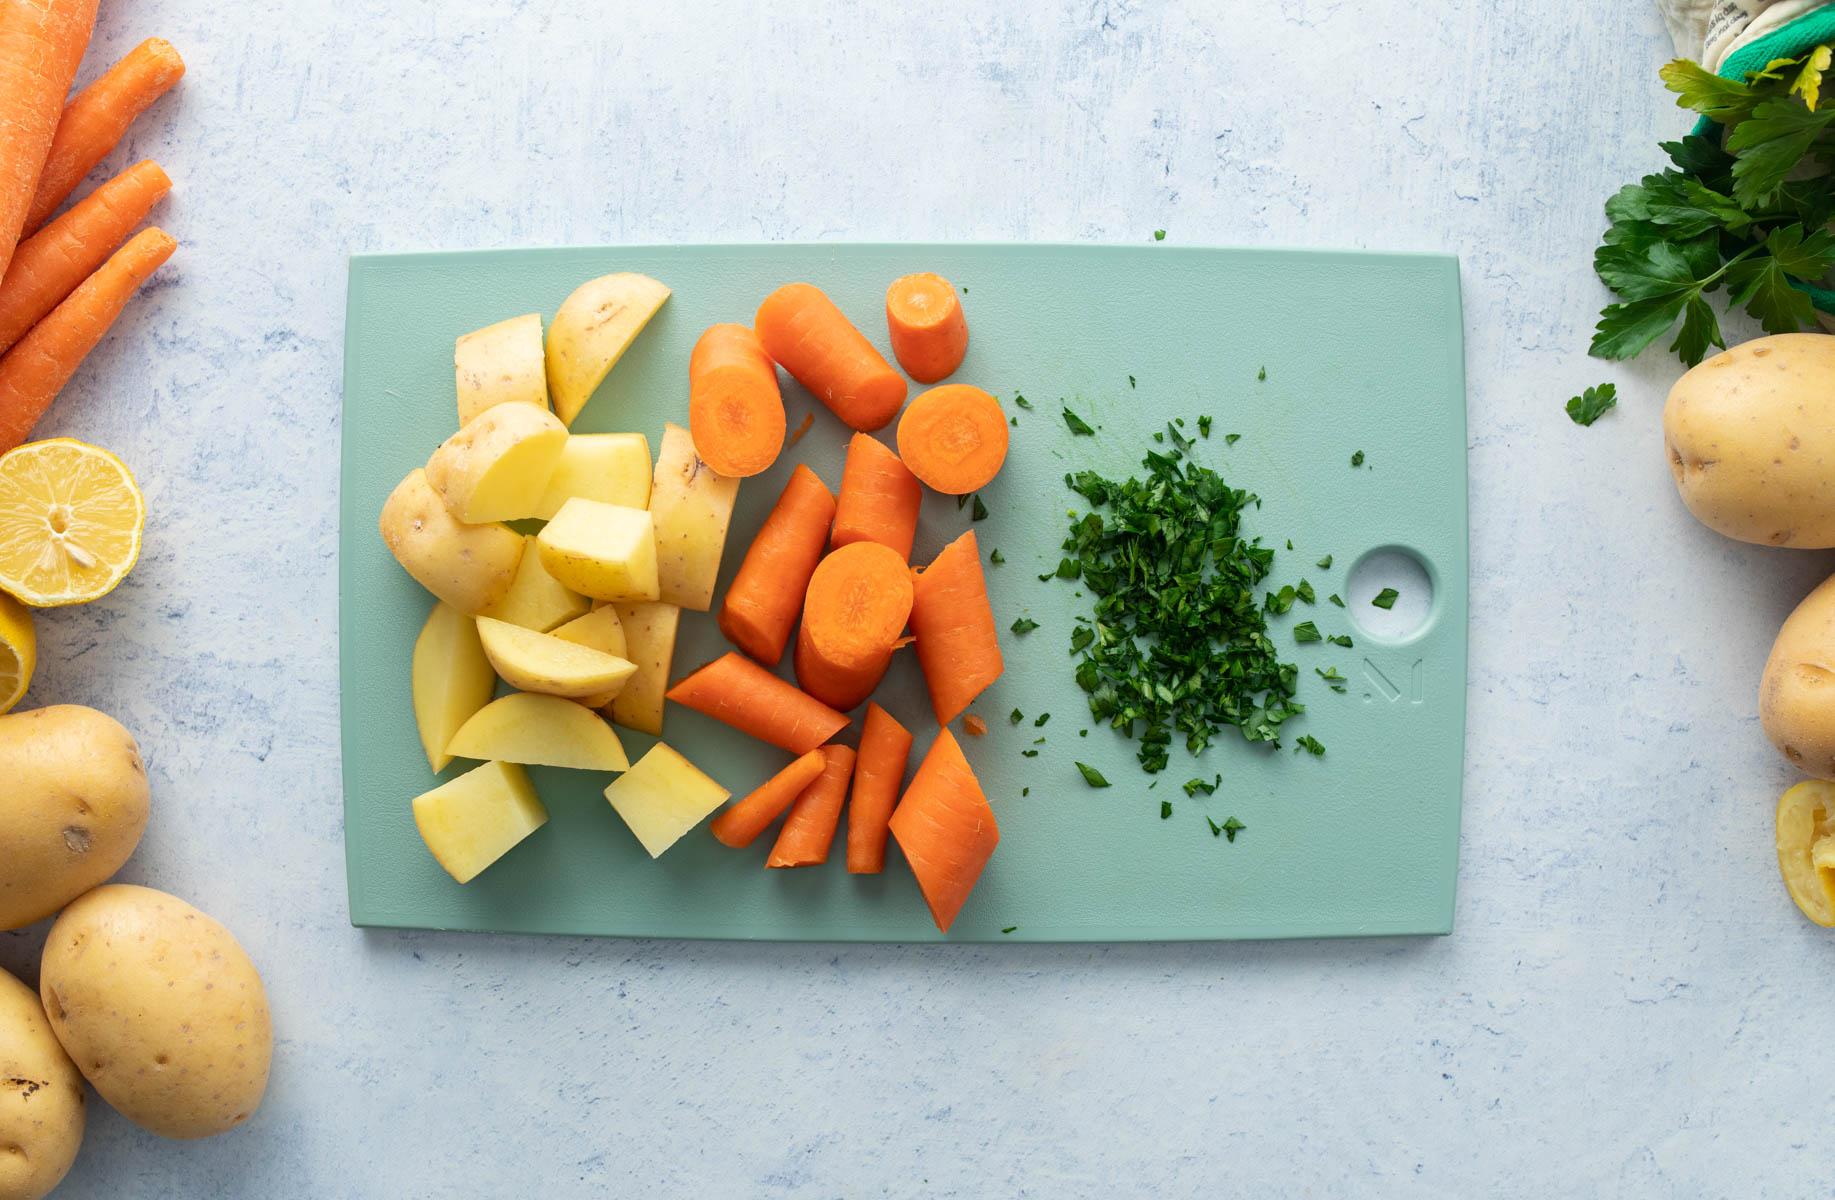 Cut potatoes, carrots, parsley on green cutting board